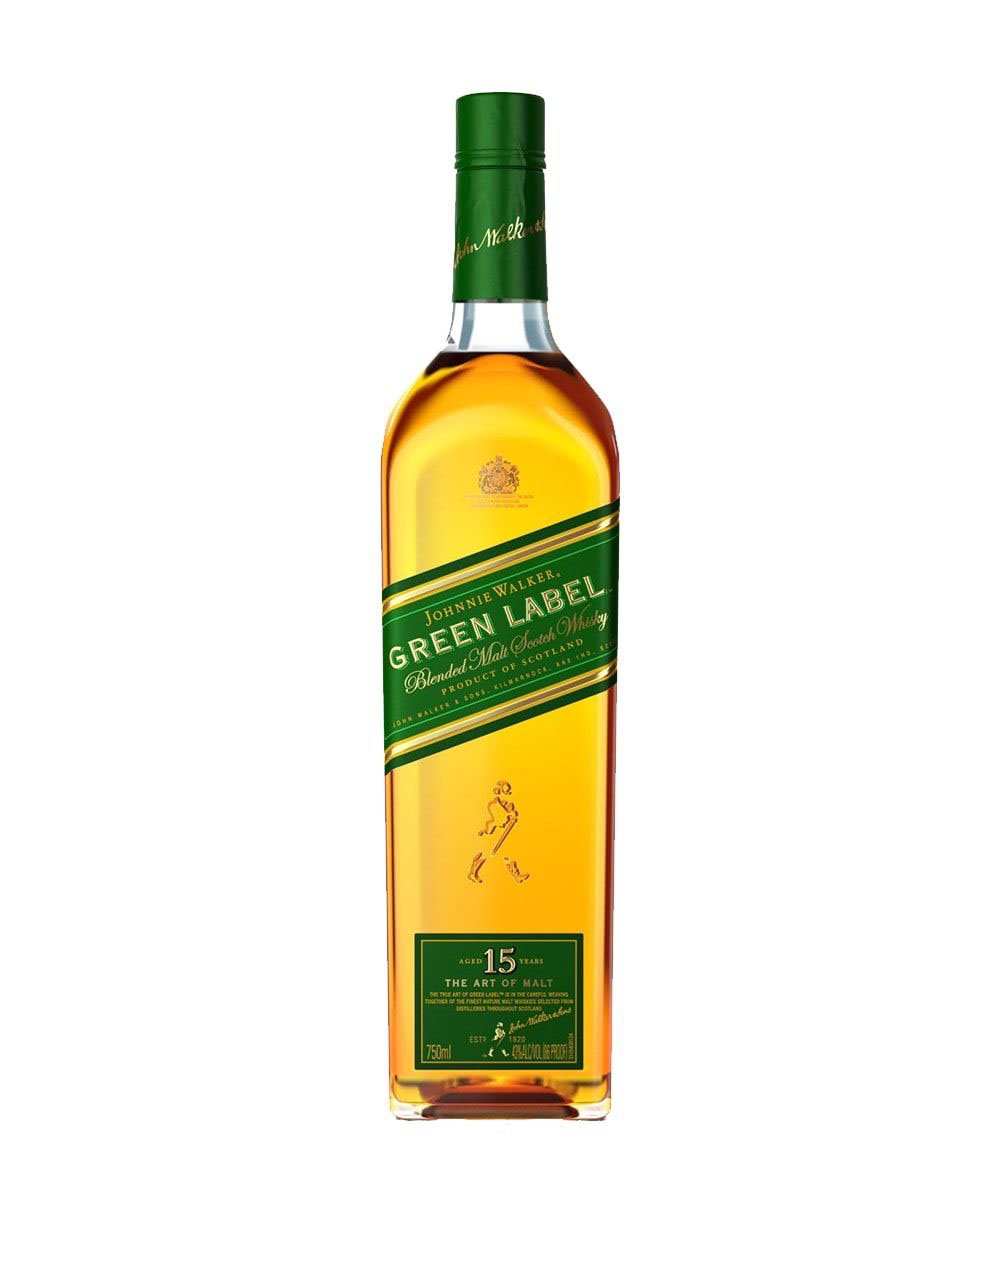 Johnnie Walker Blue Label Los Angeles Edition Scotch Whisky